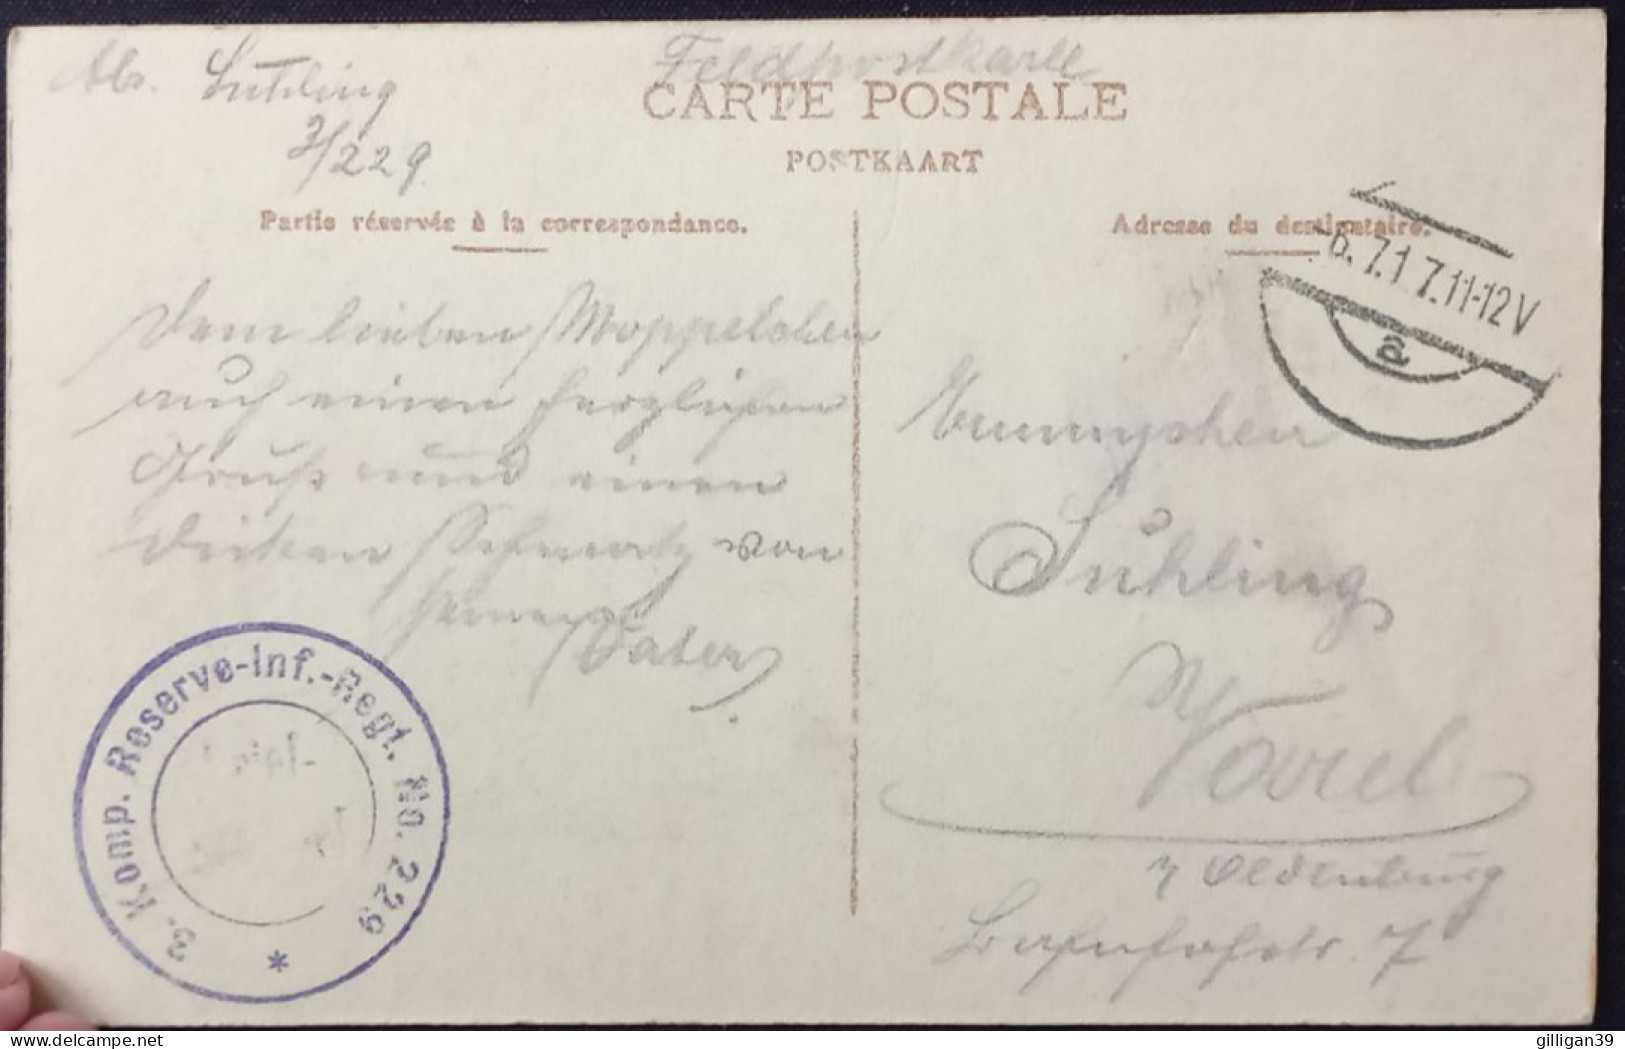 ROULERS, Rue Conscience, 3. Komp. Reserve-inf.-Regt. No. 229, Feldpost 1917 - Röselare